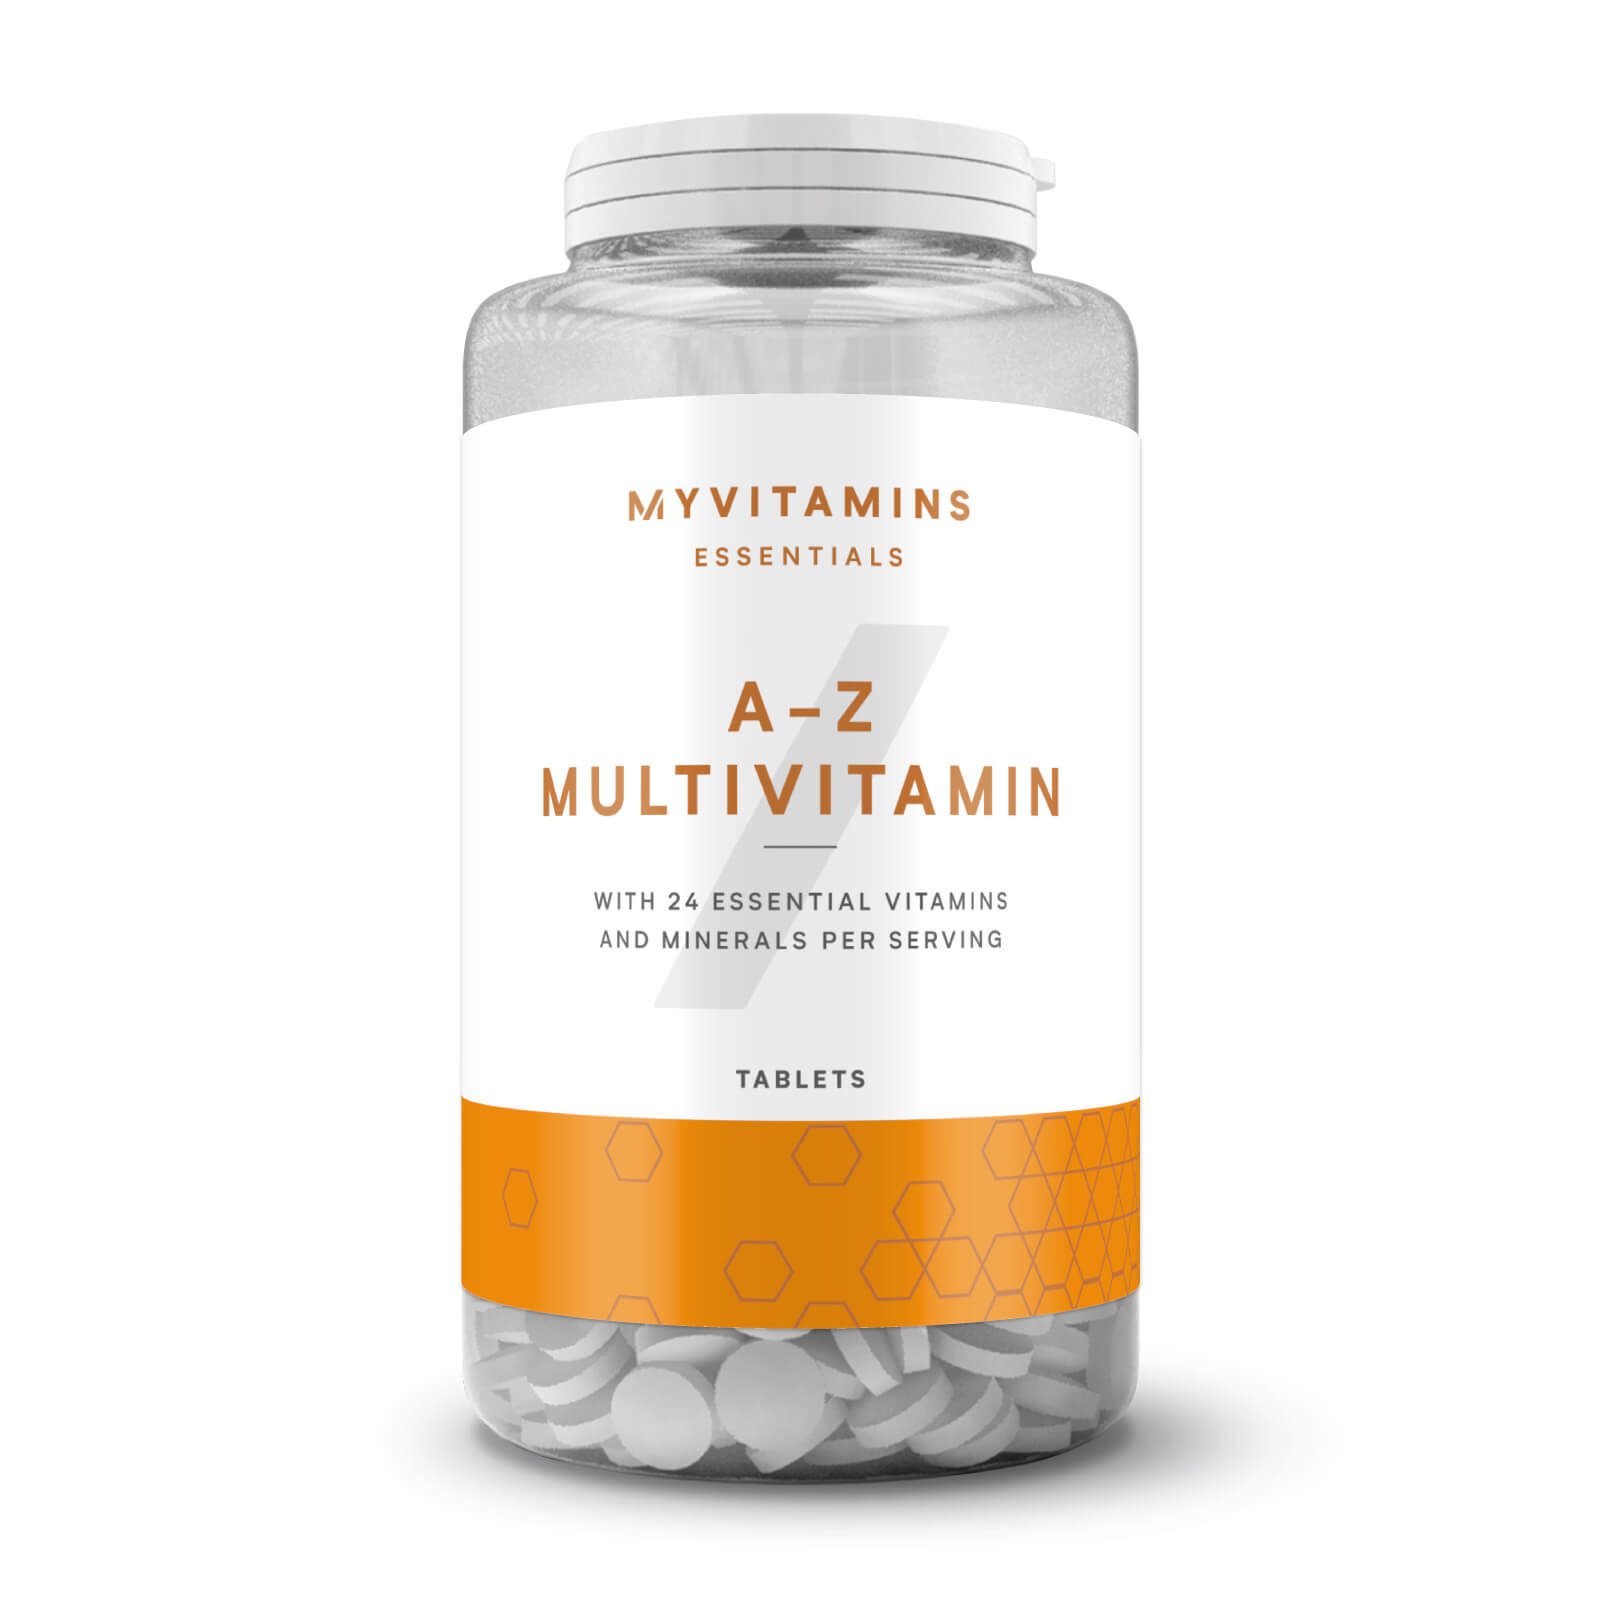 Myvitamins Myvitamins A-Z Multivitamin - 90tablets - Non-Vegan